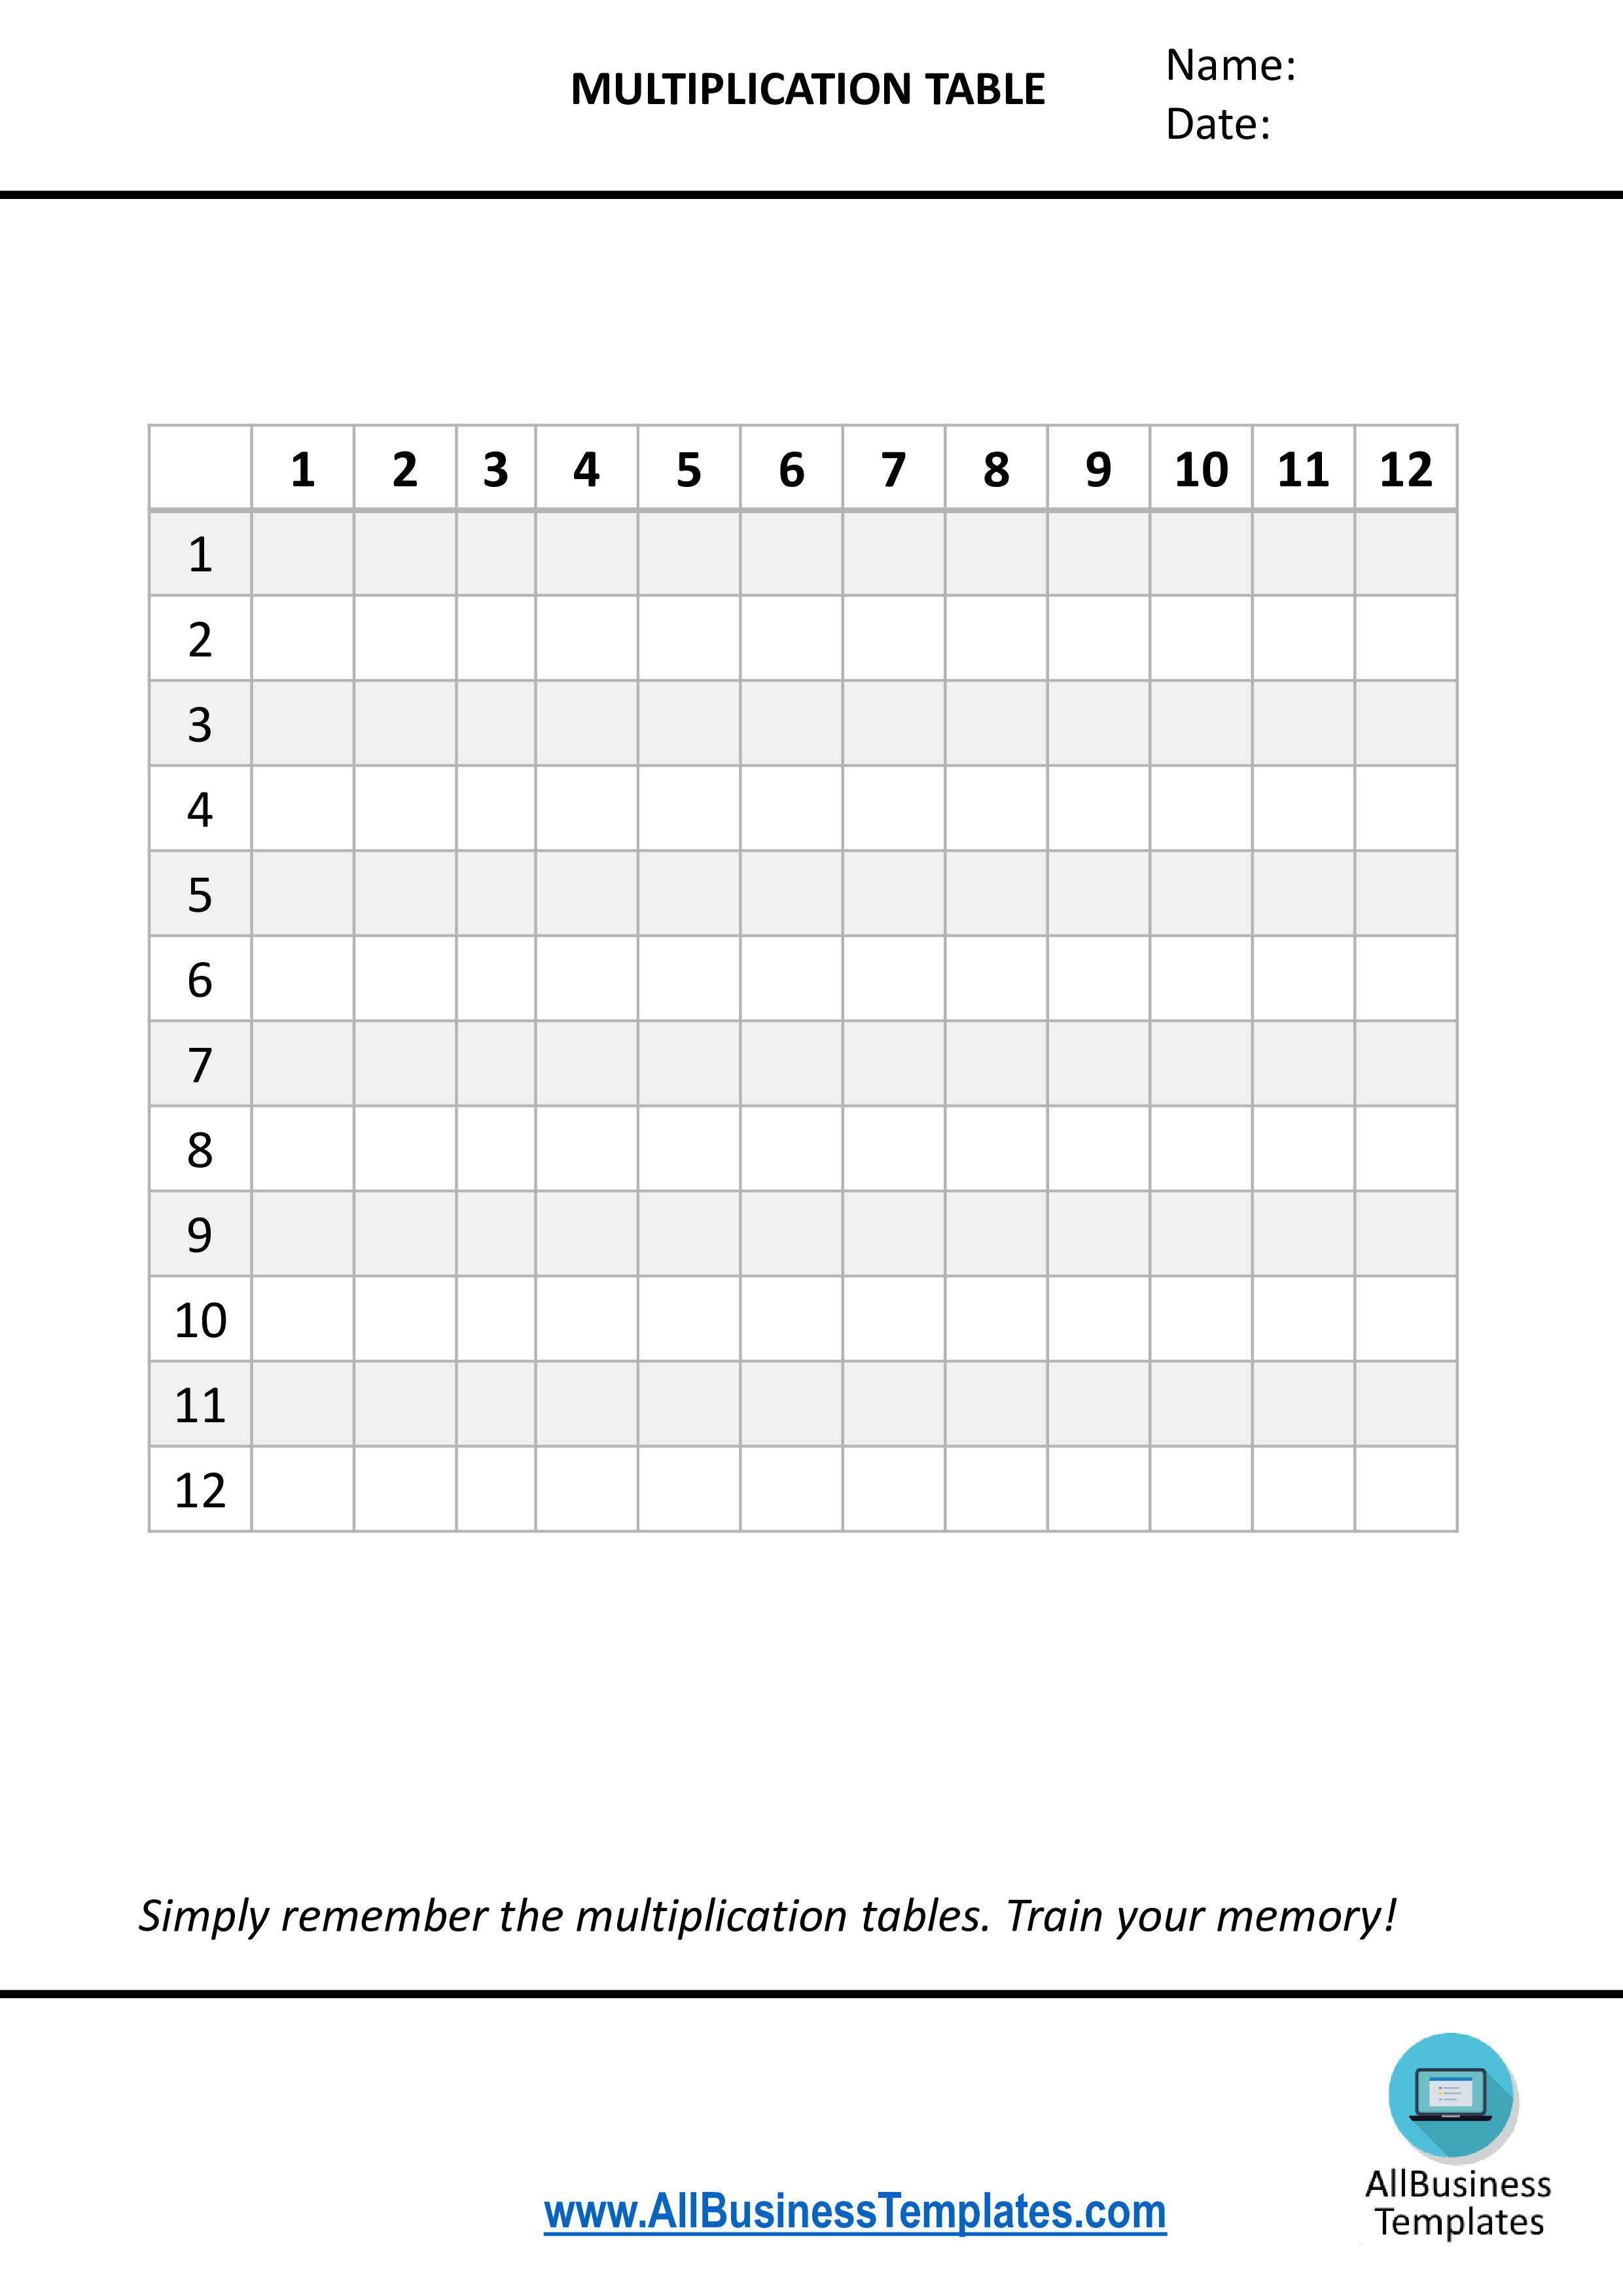 multiplication tables voorbeeld afbeelding 